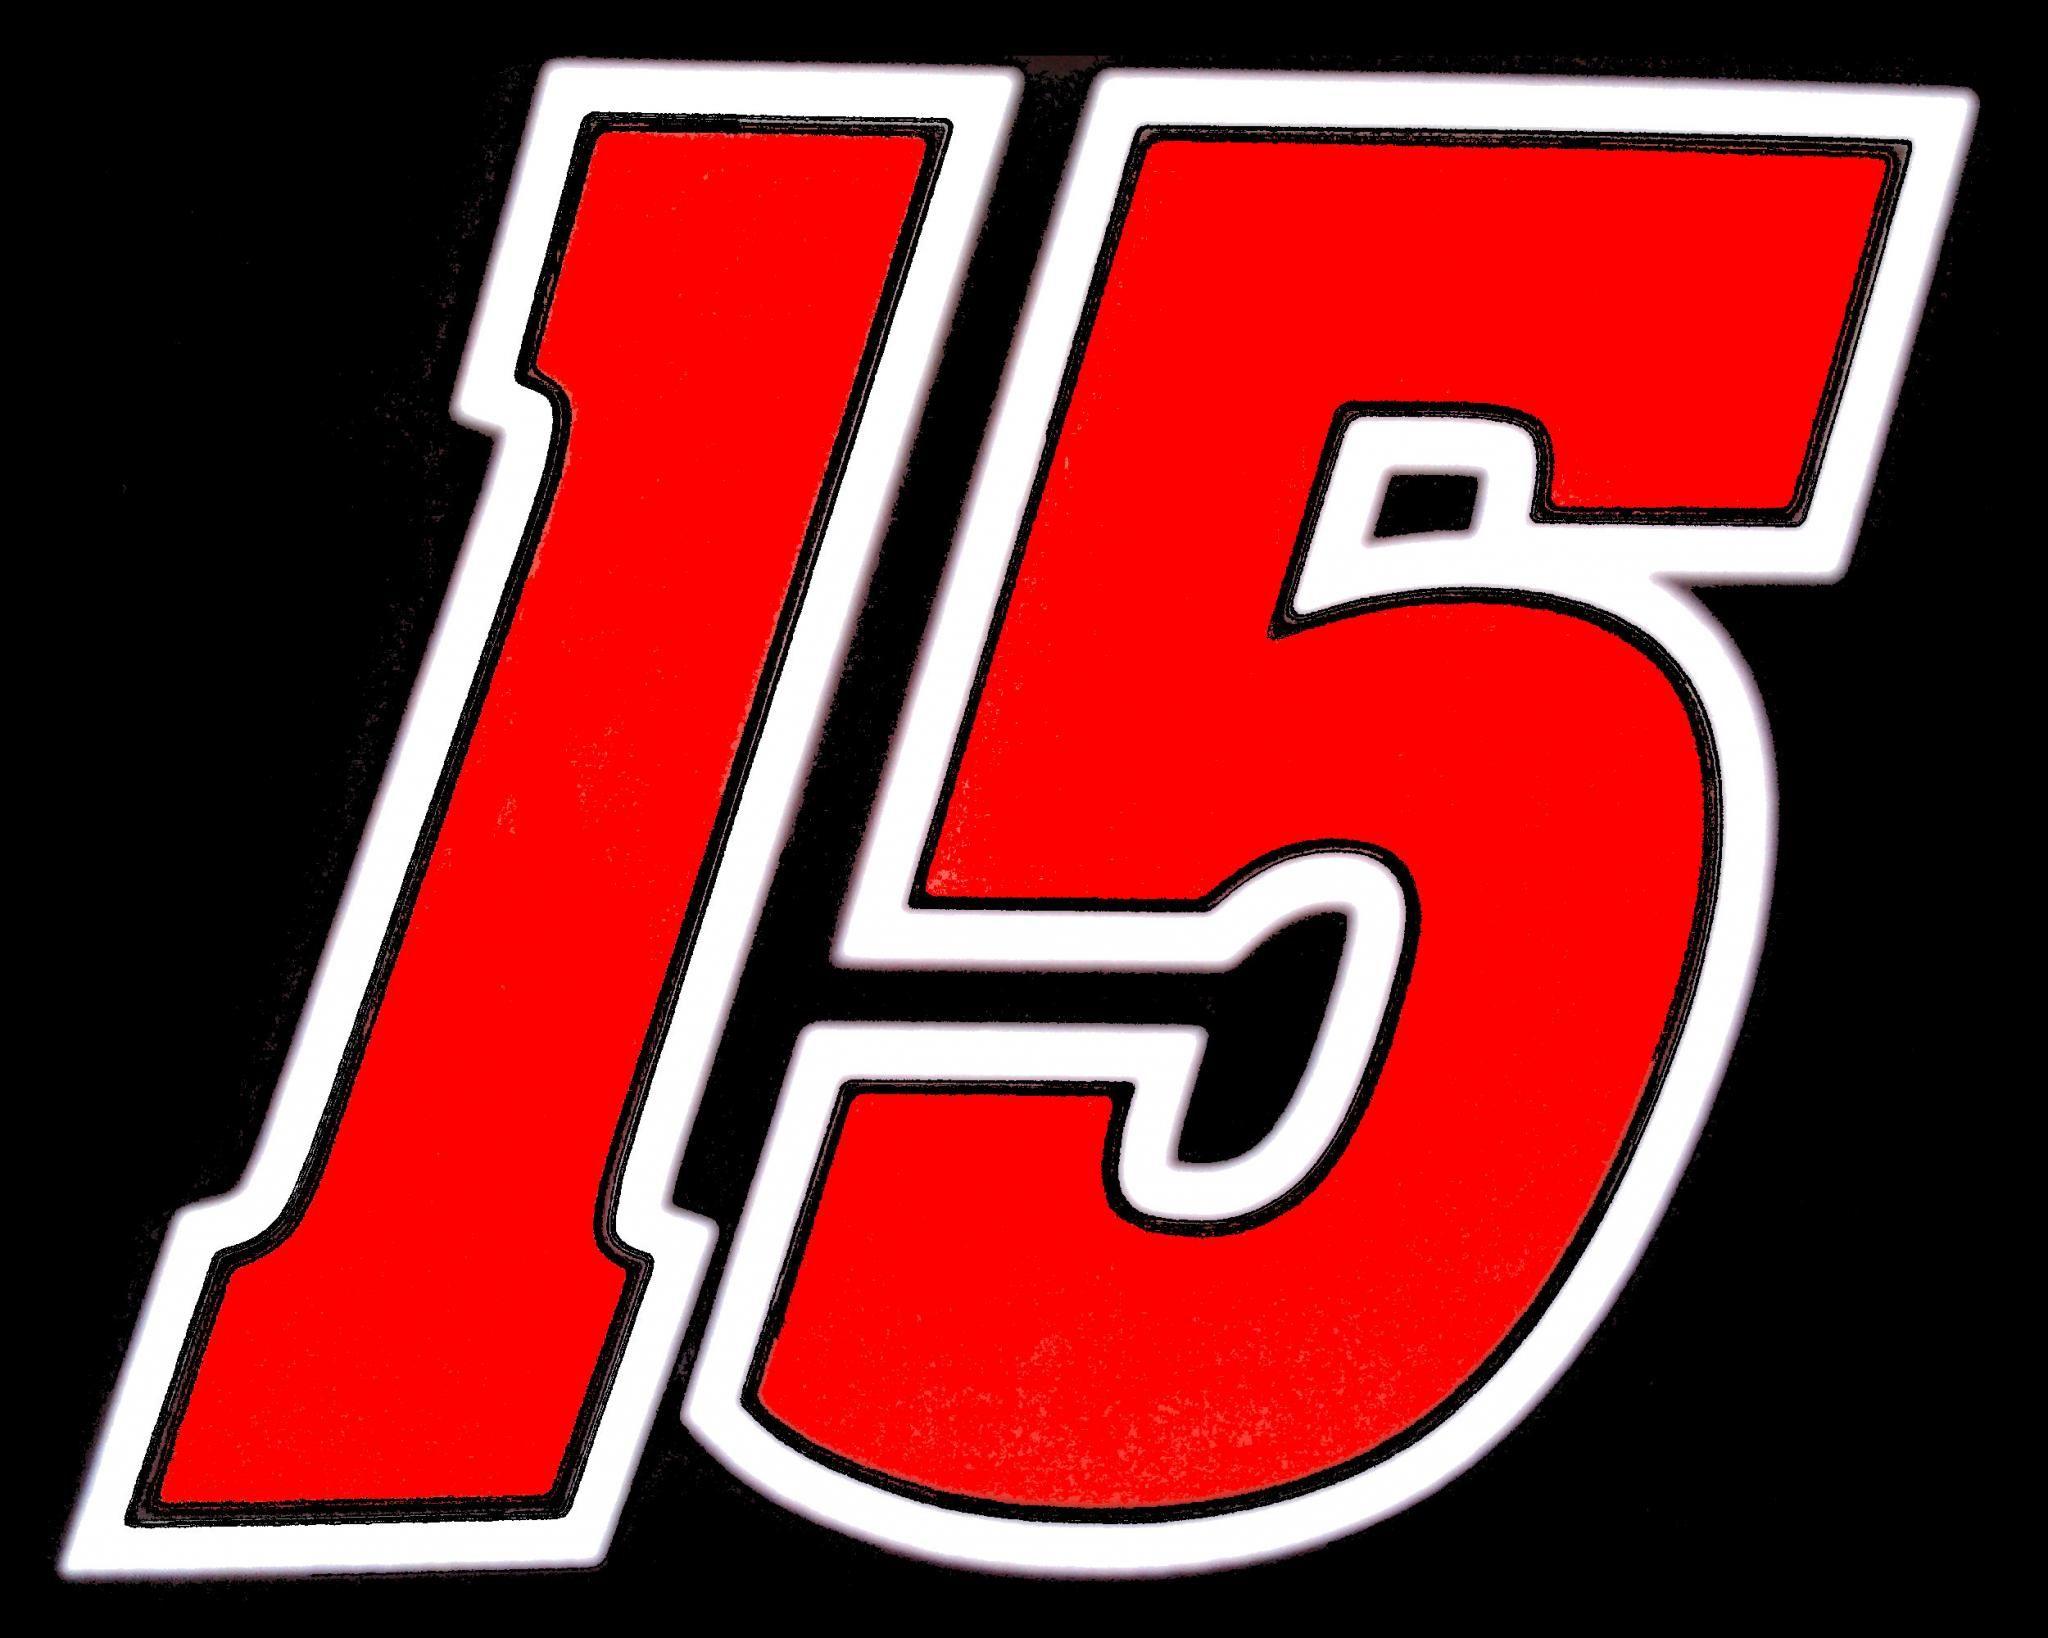 NASCAR Number Logo - LogoDix